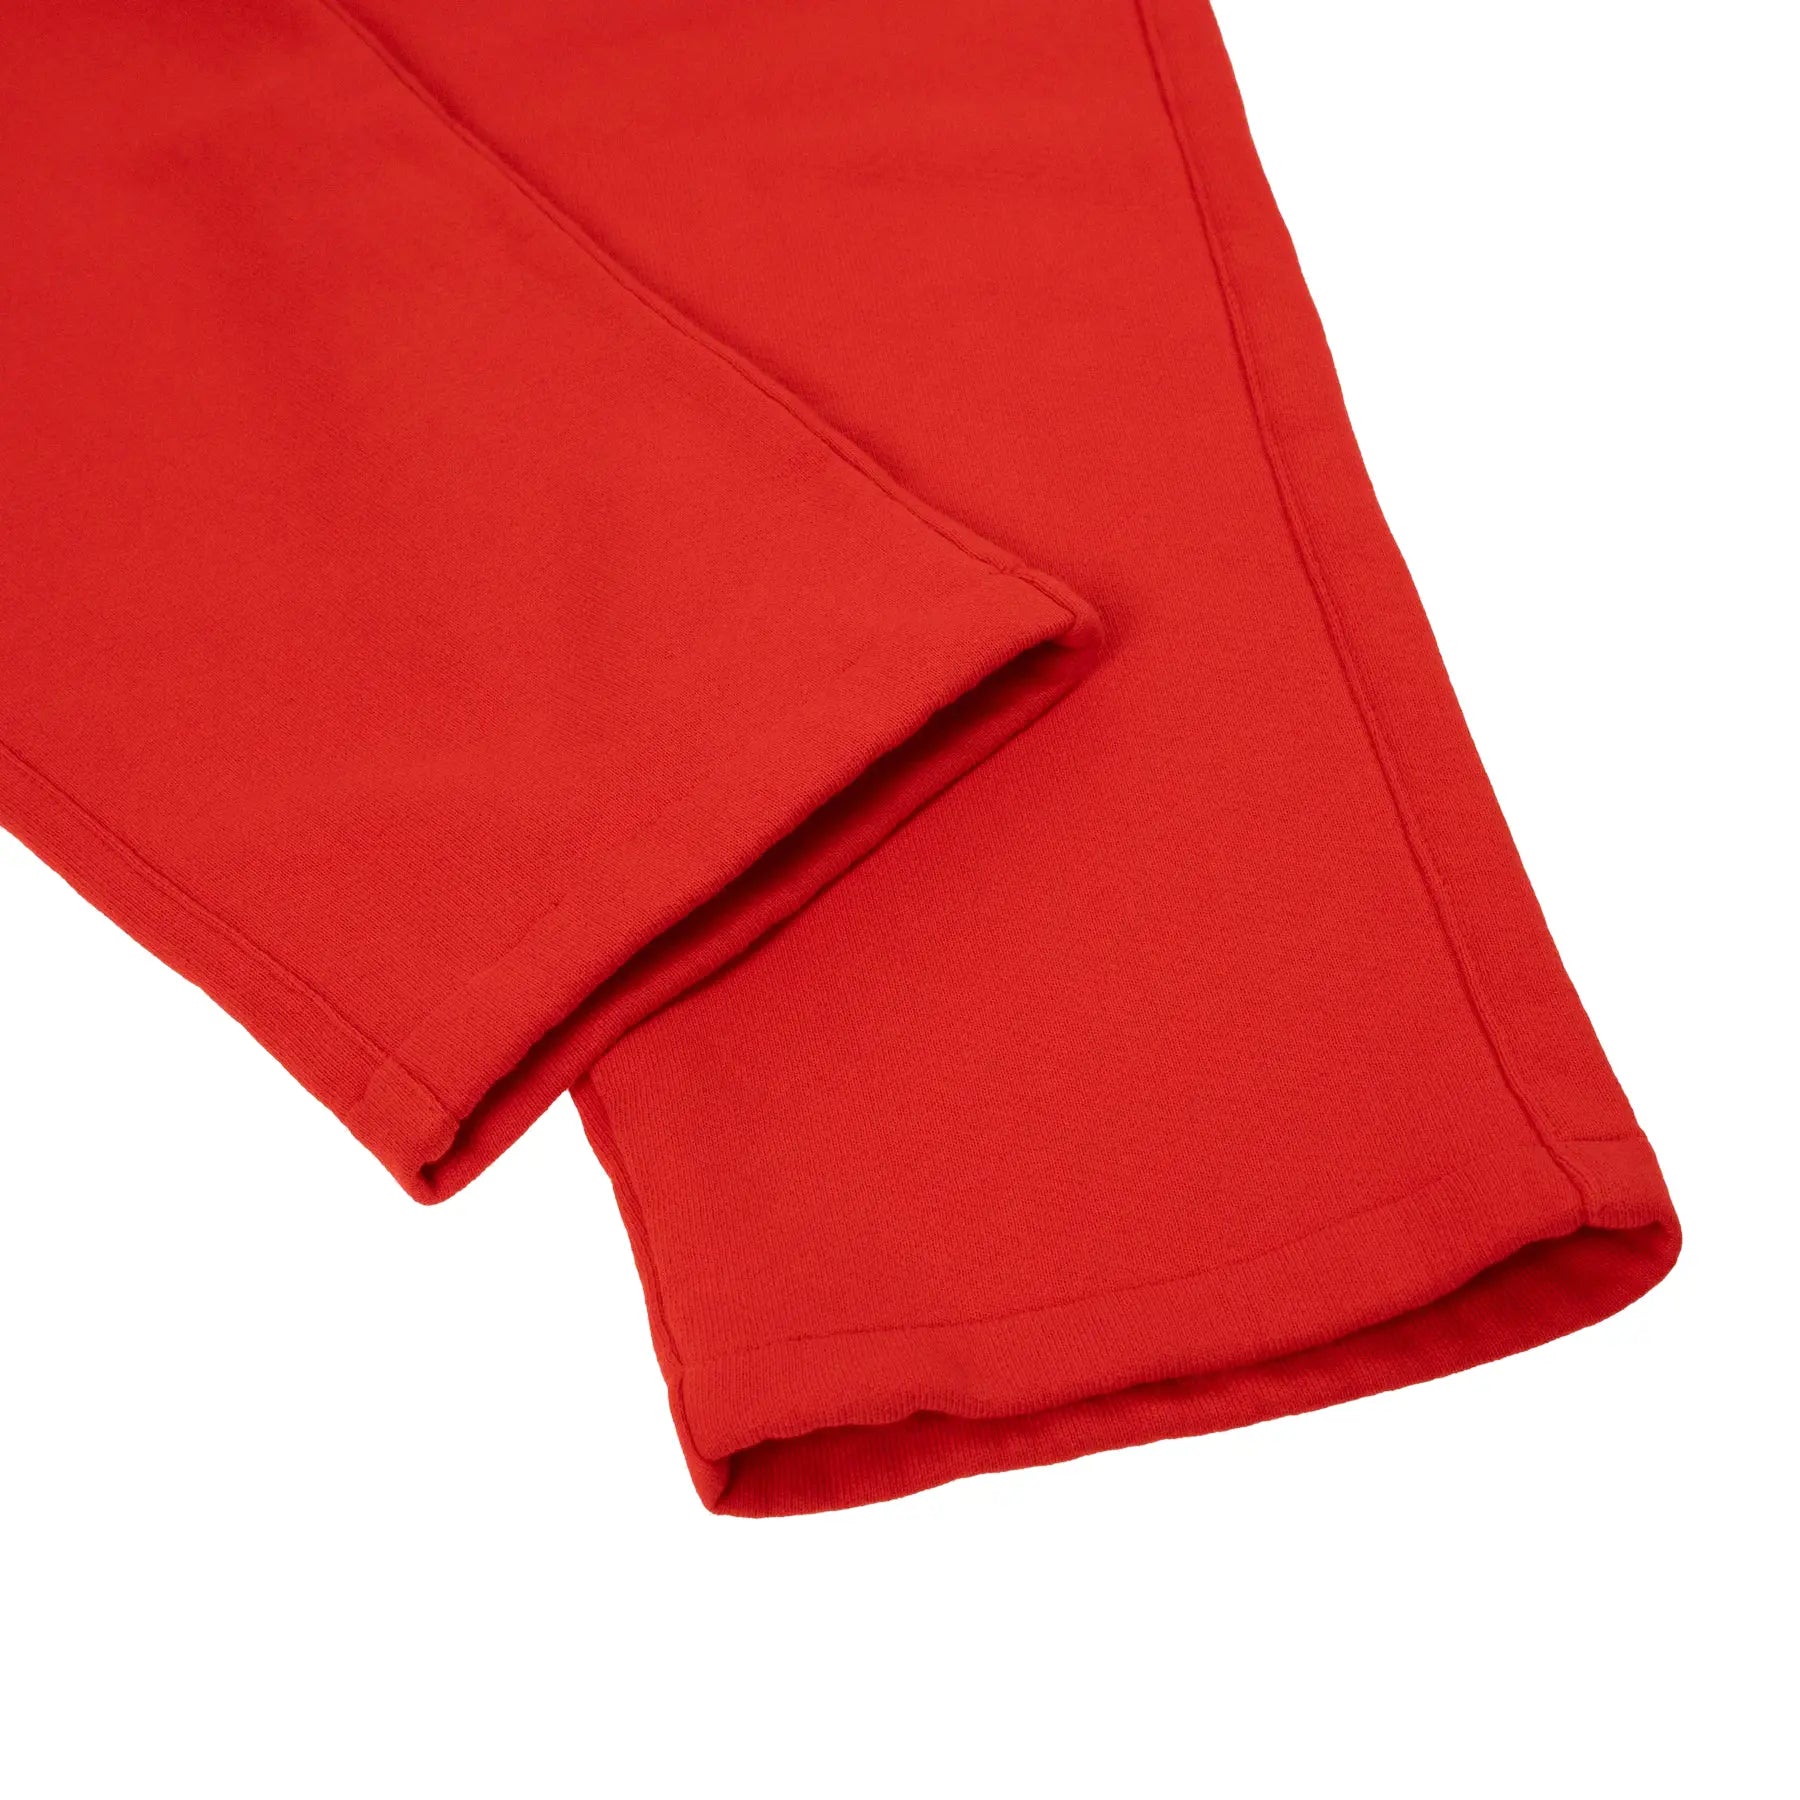 Leg view of Eric Emanuel EE Basic Red Sweatpants